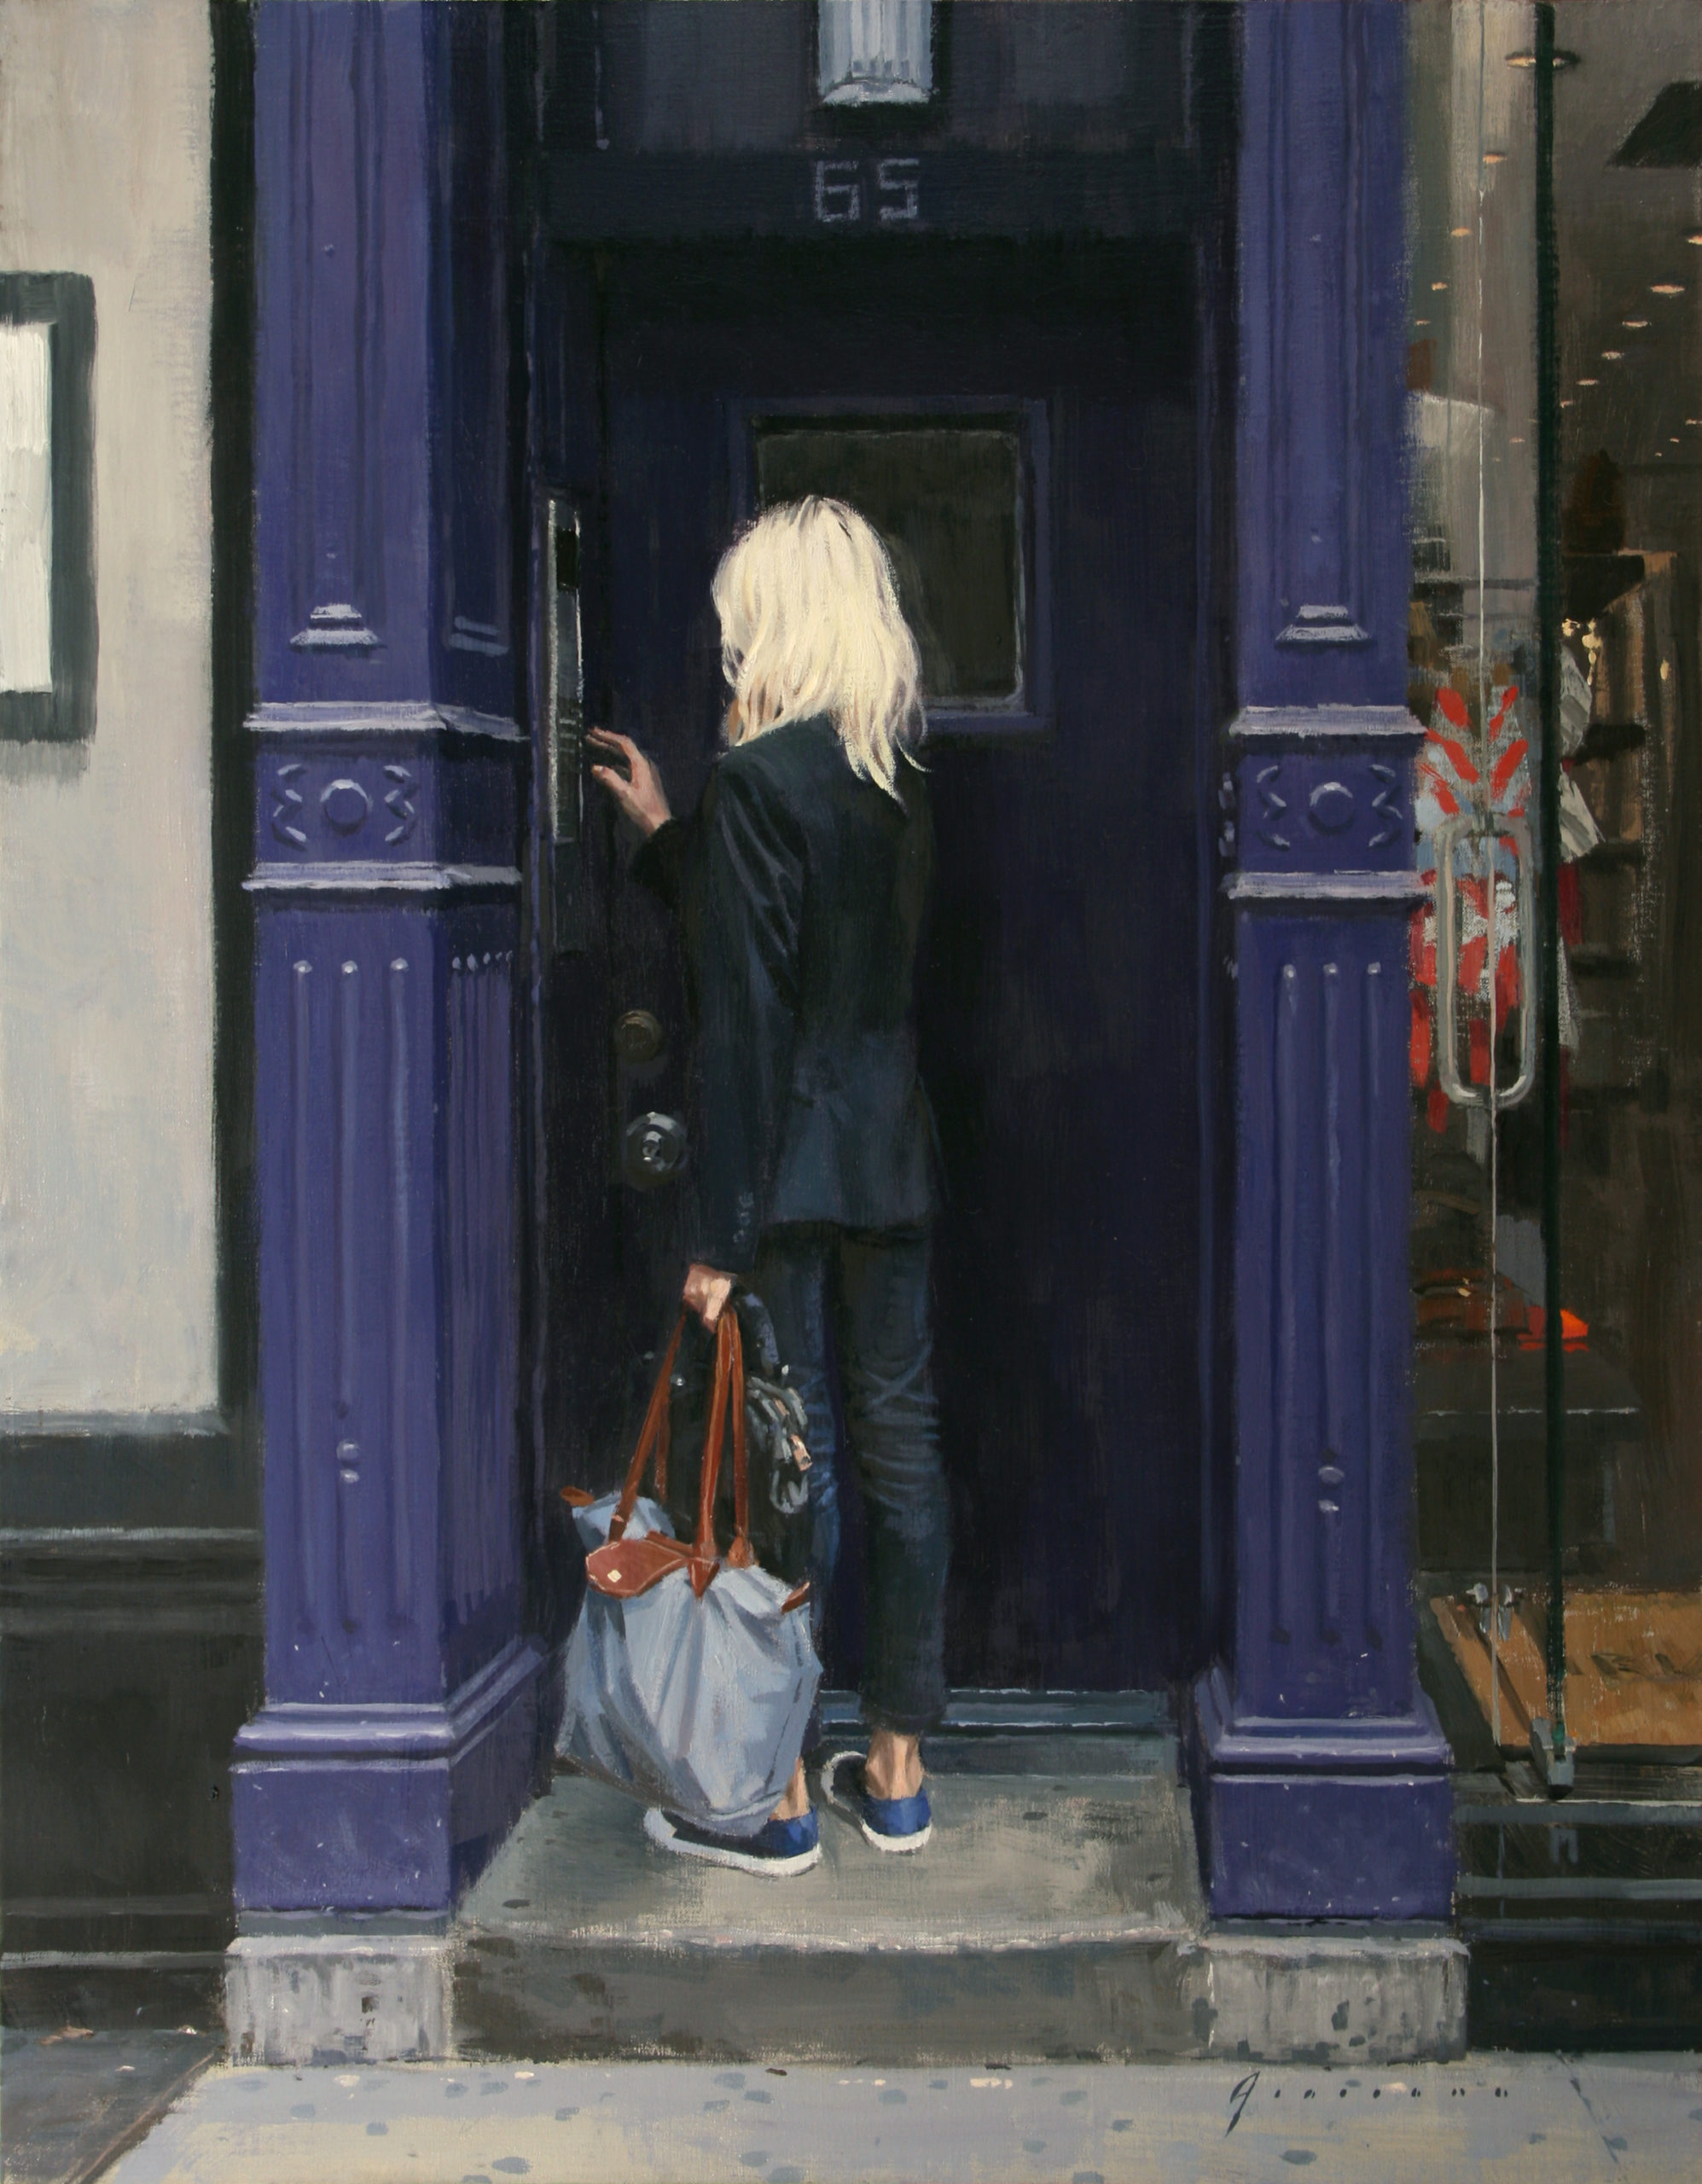 Vincent Giarrano, "Purple Doorway," 18 x 14 inches, Oil on linen